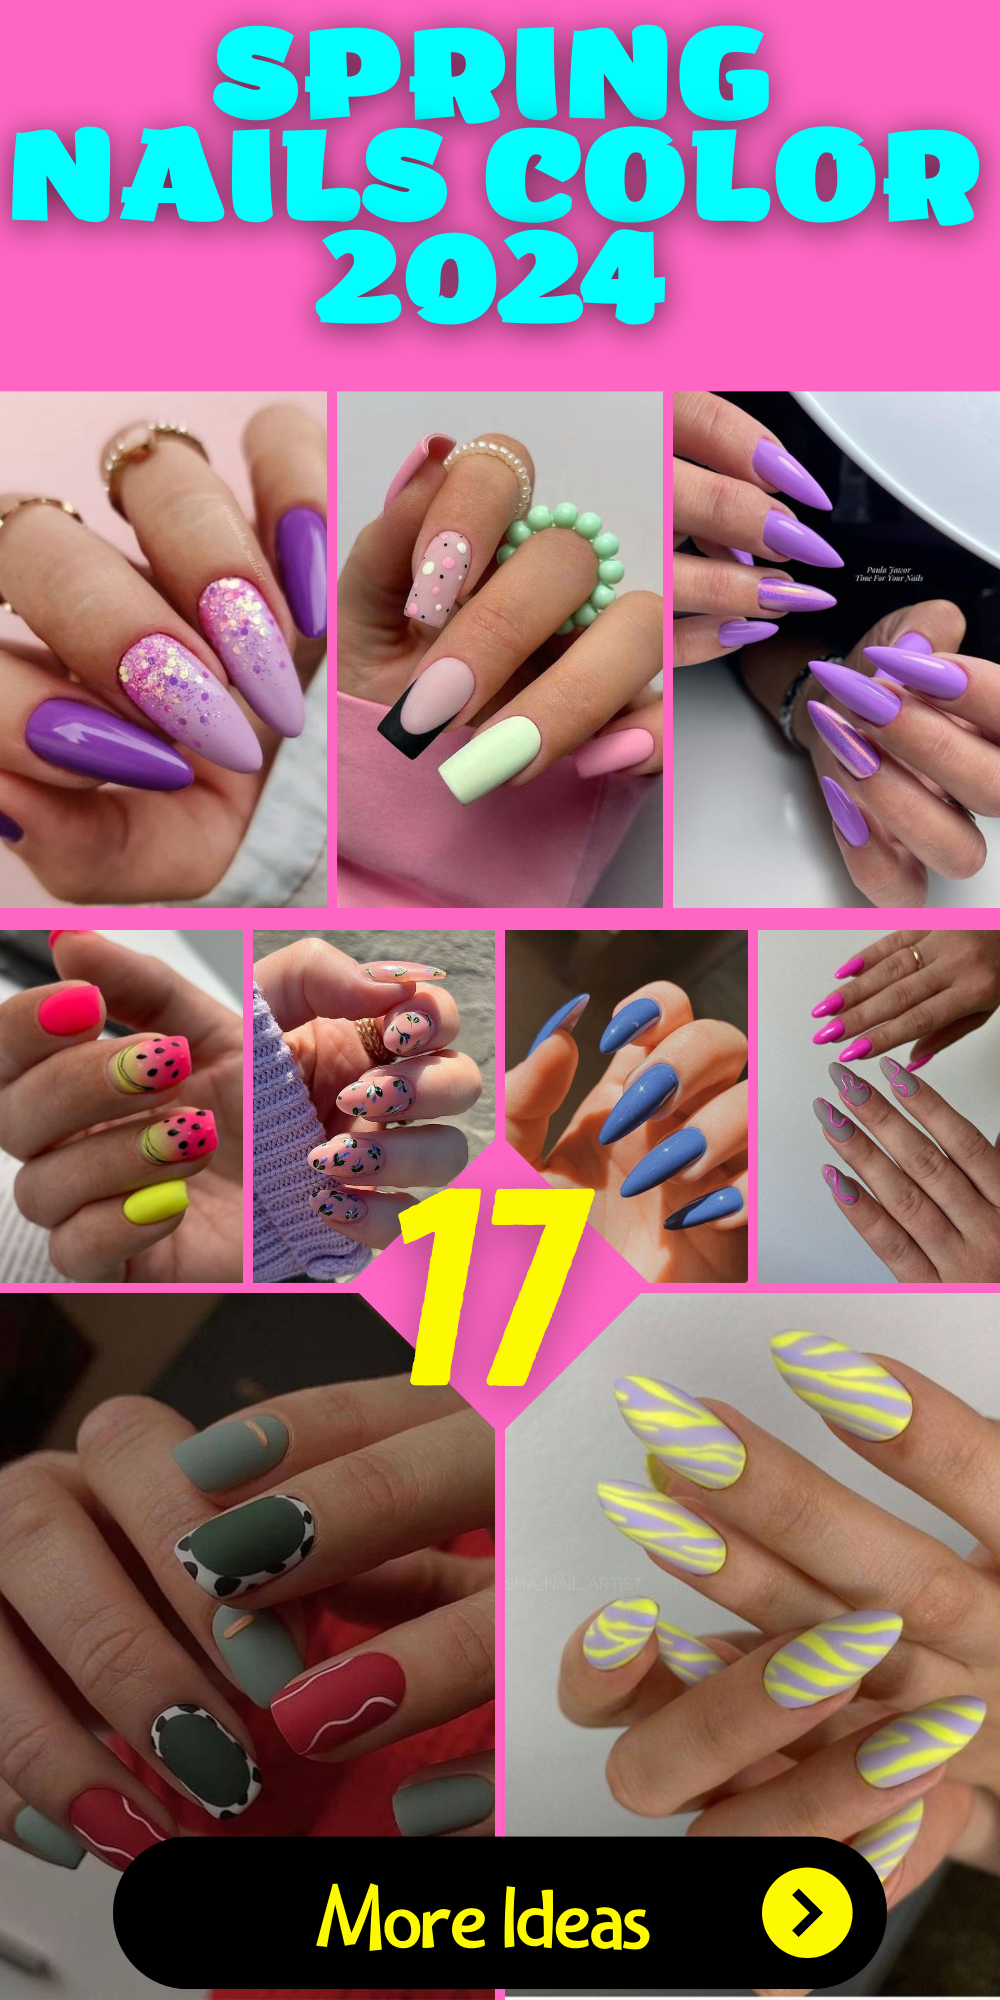 Spring Nails Color 2024 Gel Polish Ideas, Sns, and Cute Art Designs